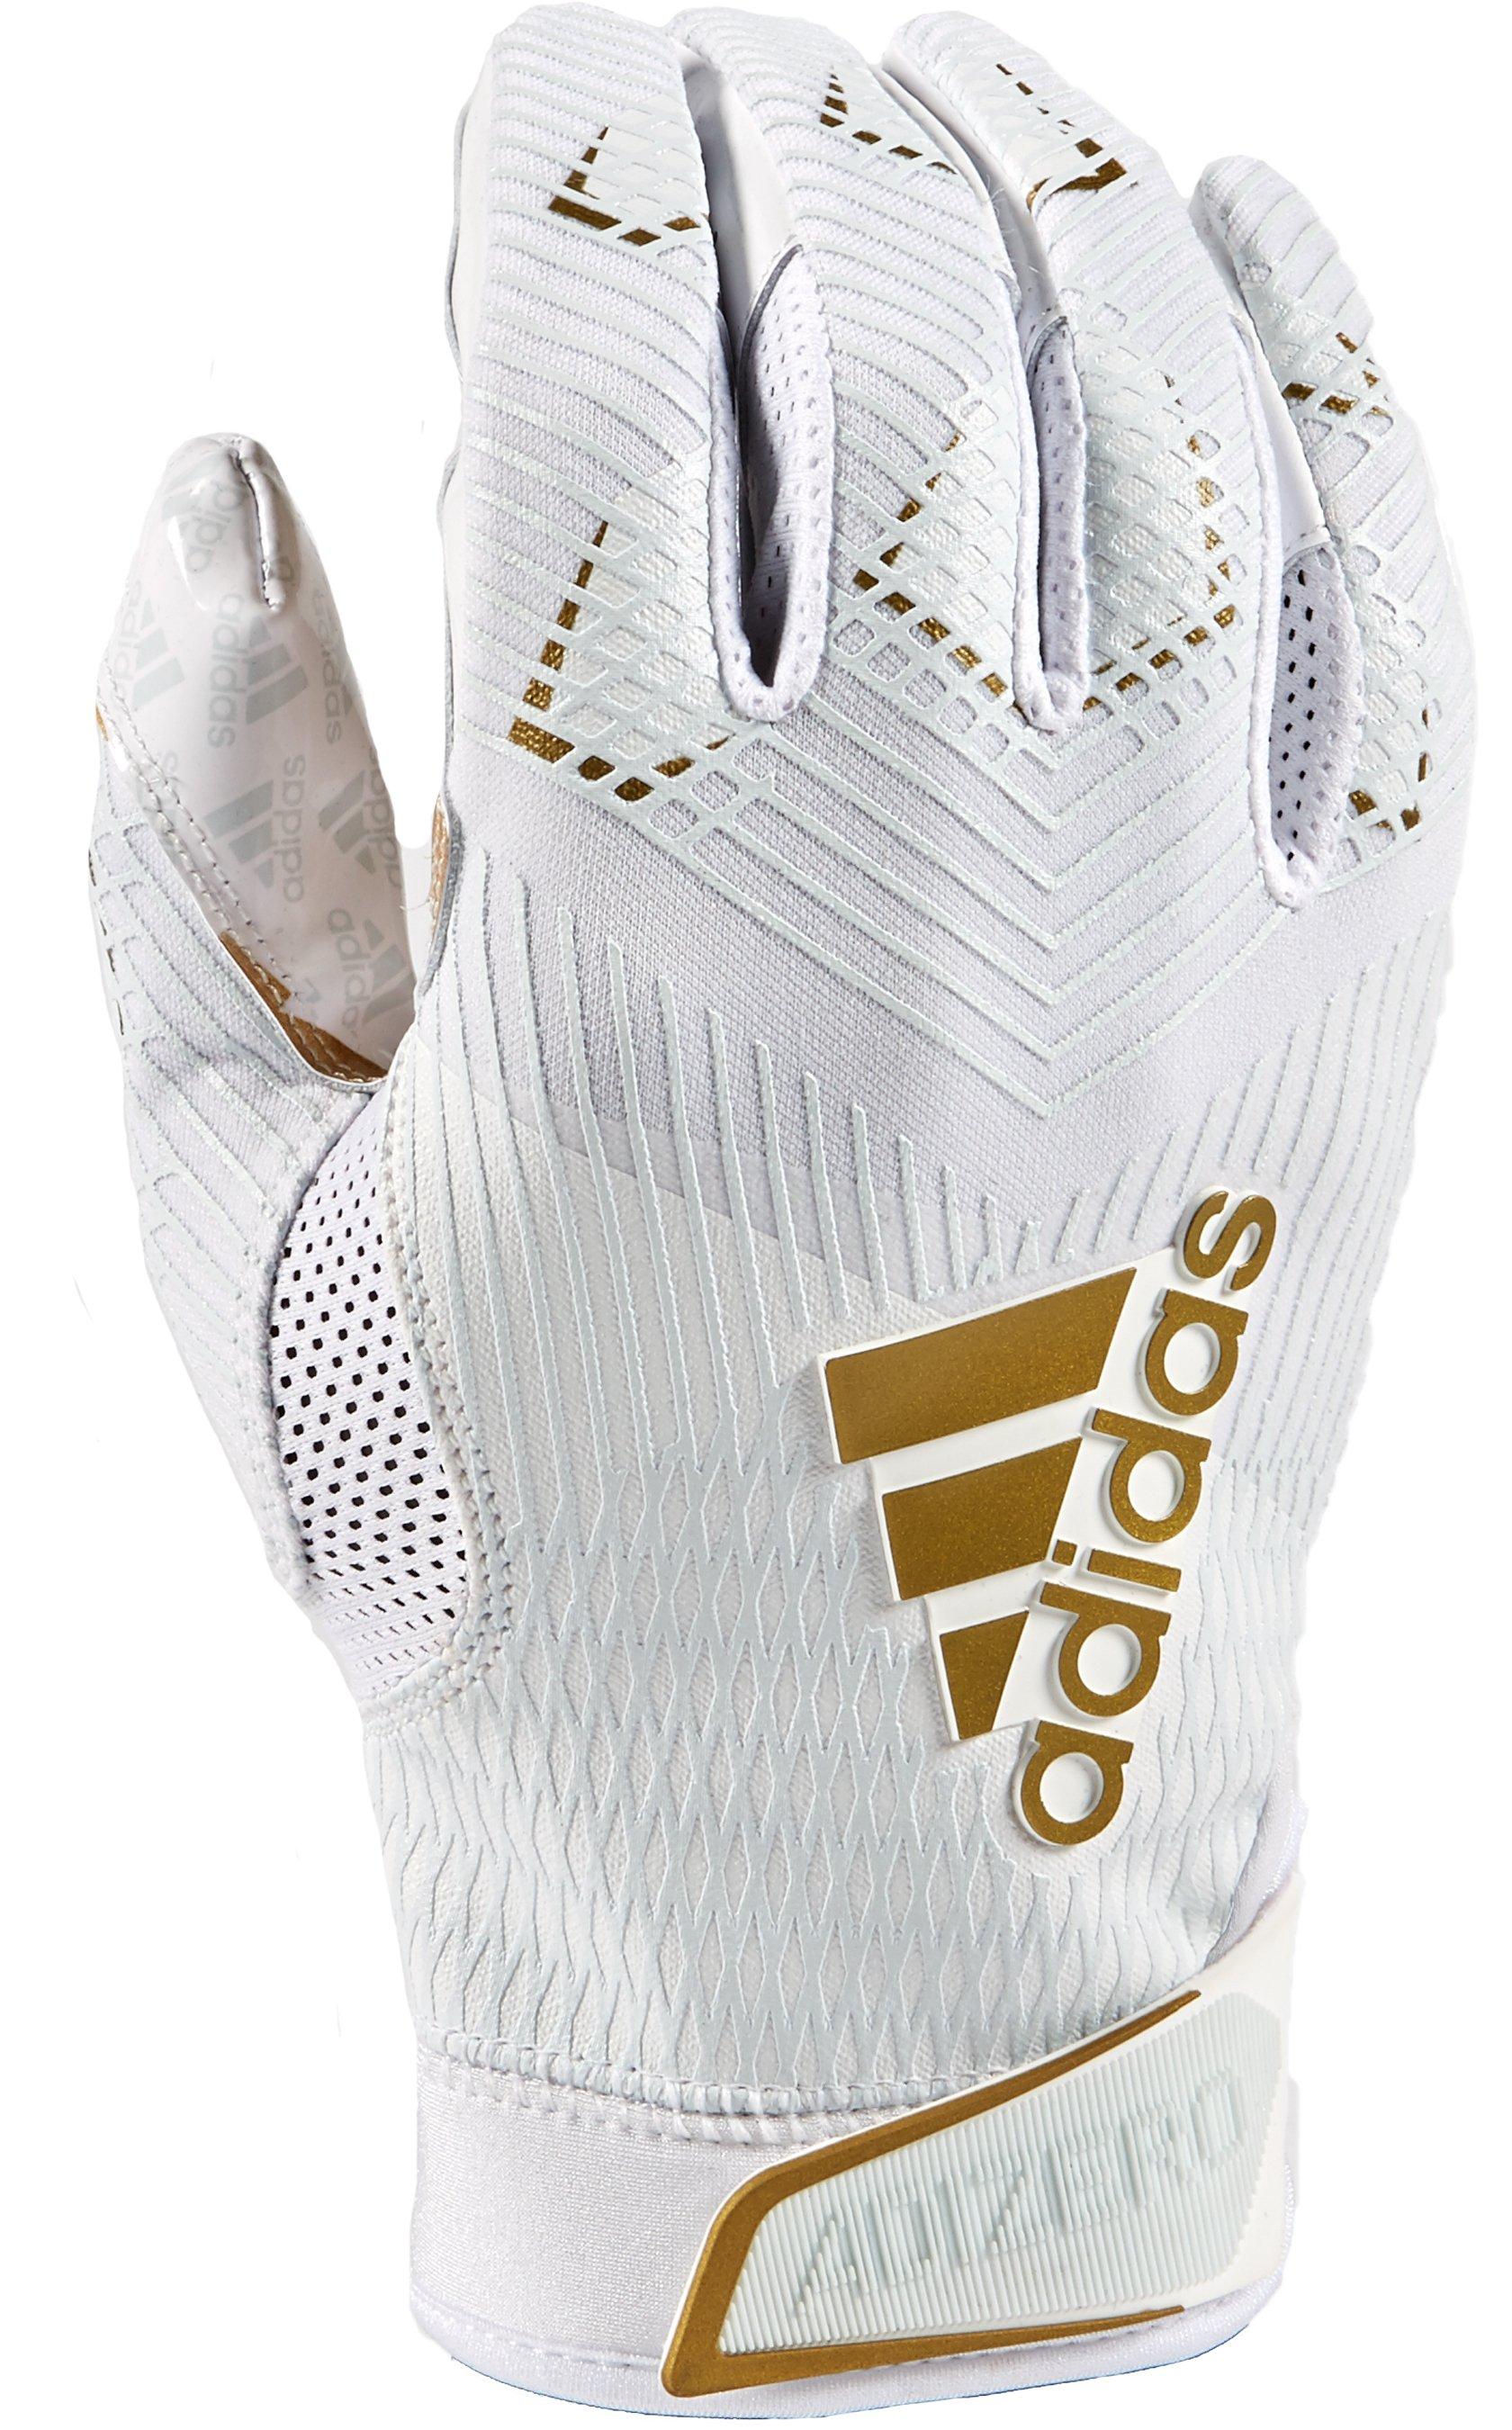 adidas gloves 8.0